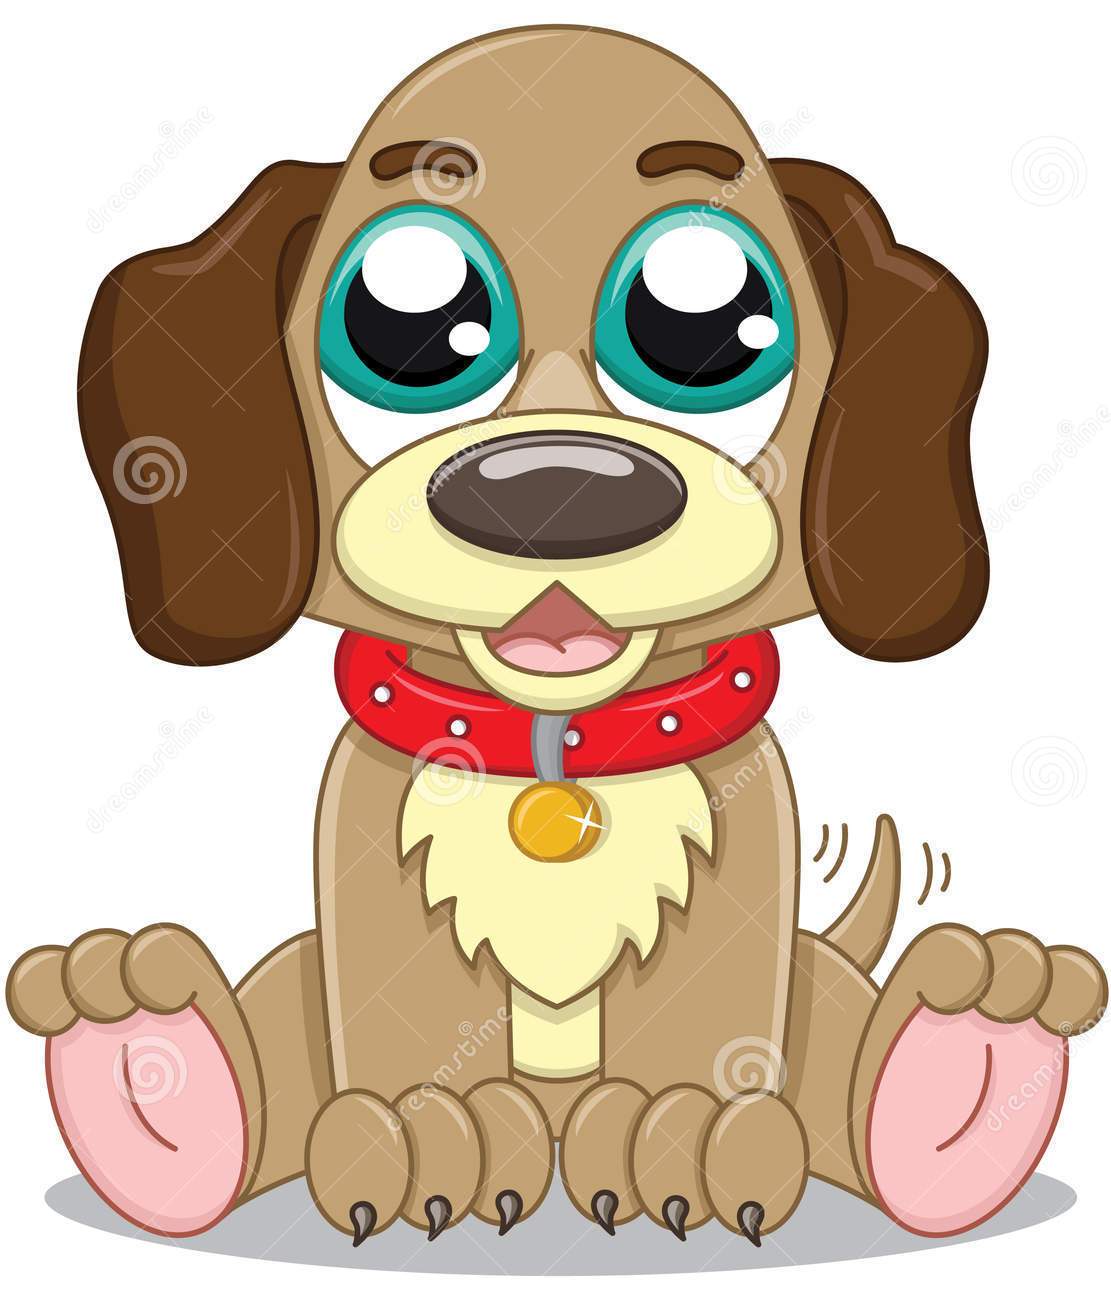 Cute Cartoon Puppy | Free Images at Clker.com - vector clip art online